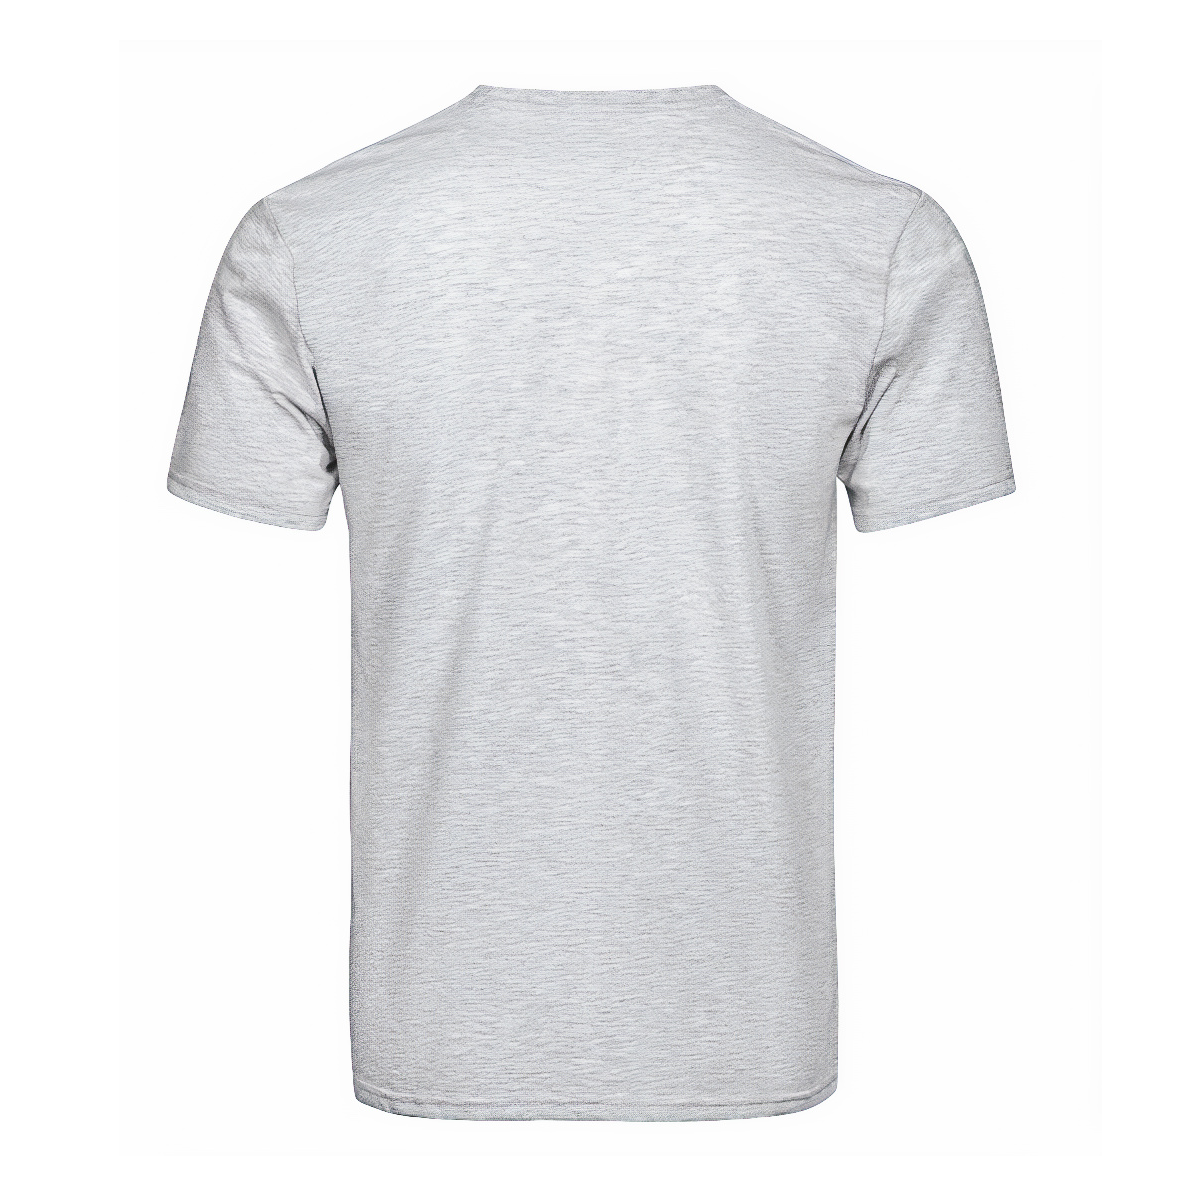 MacLean Tartan Crest T-shirt - I'm not yelling style